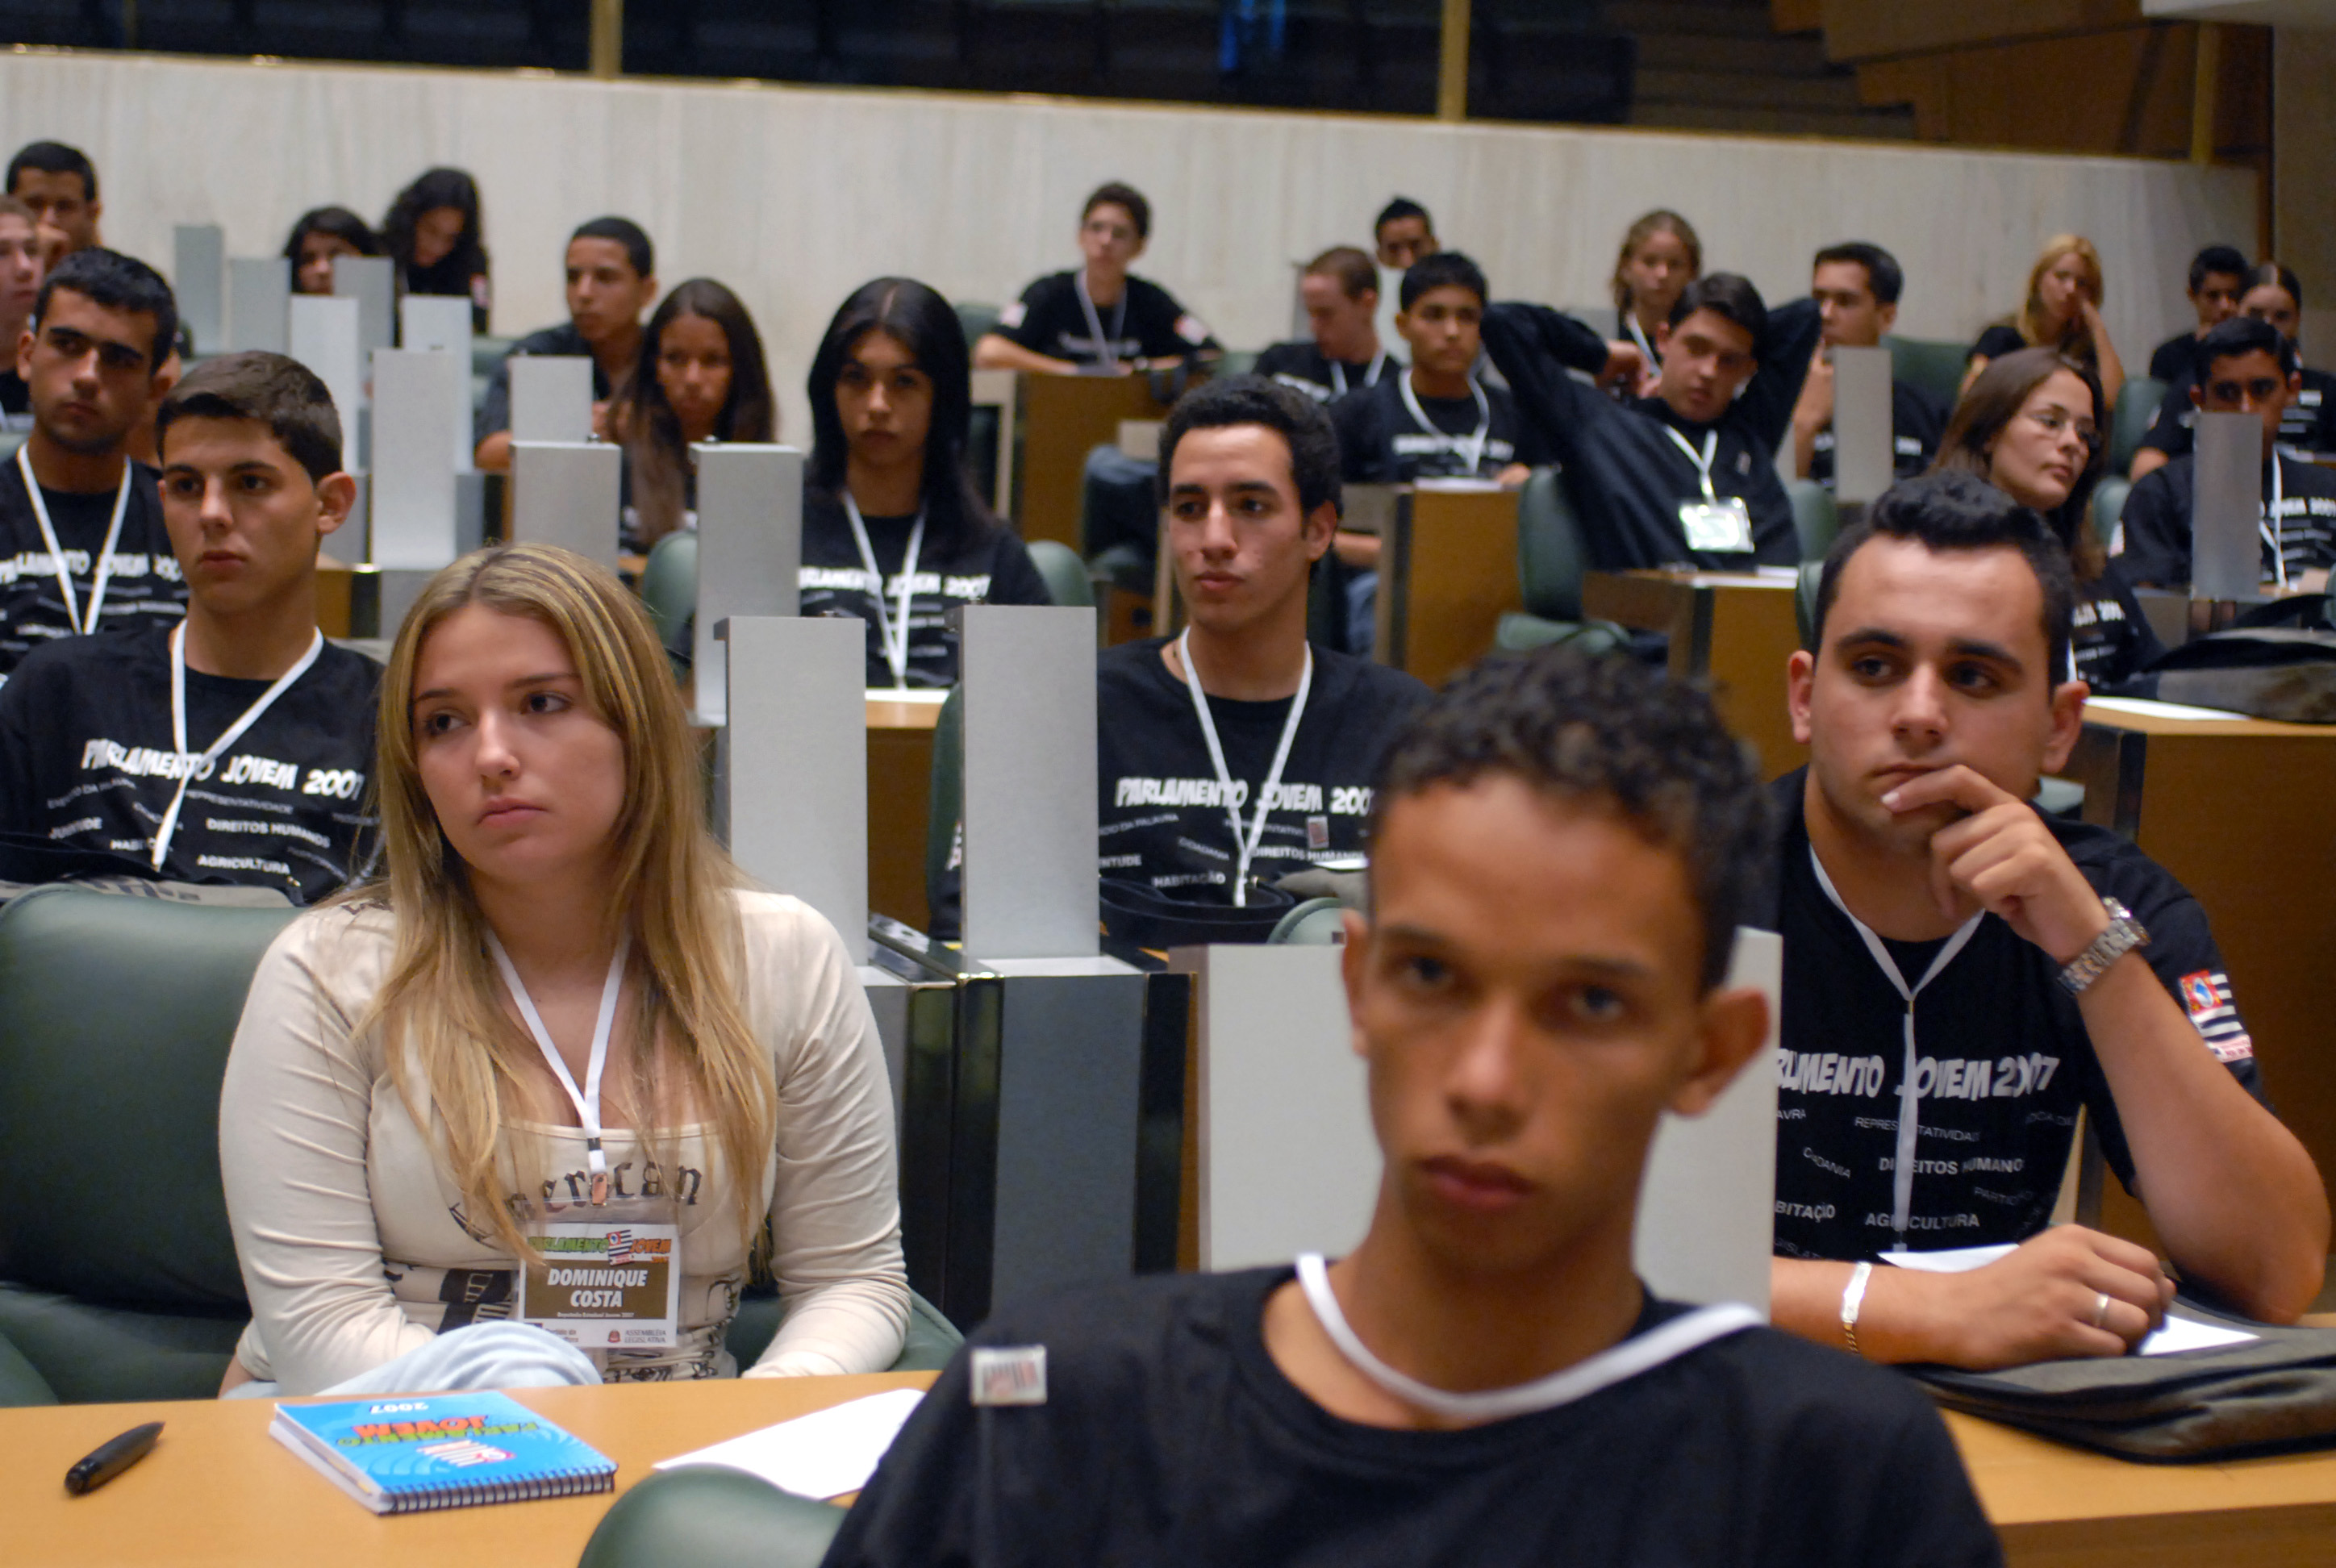 Deputados-jovens durante palestra no Plenrio Juscelino Kubitschek<a style='float:right;color:#ccc' href='https://www3.al.sp.gov.br/repositorio/noticia/03-2008/AURO CRIANCAS mmy (26).jpg' target=_blank><i class='bi bi-zoom-in'></i> Clique para ver a imagem </a>